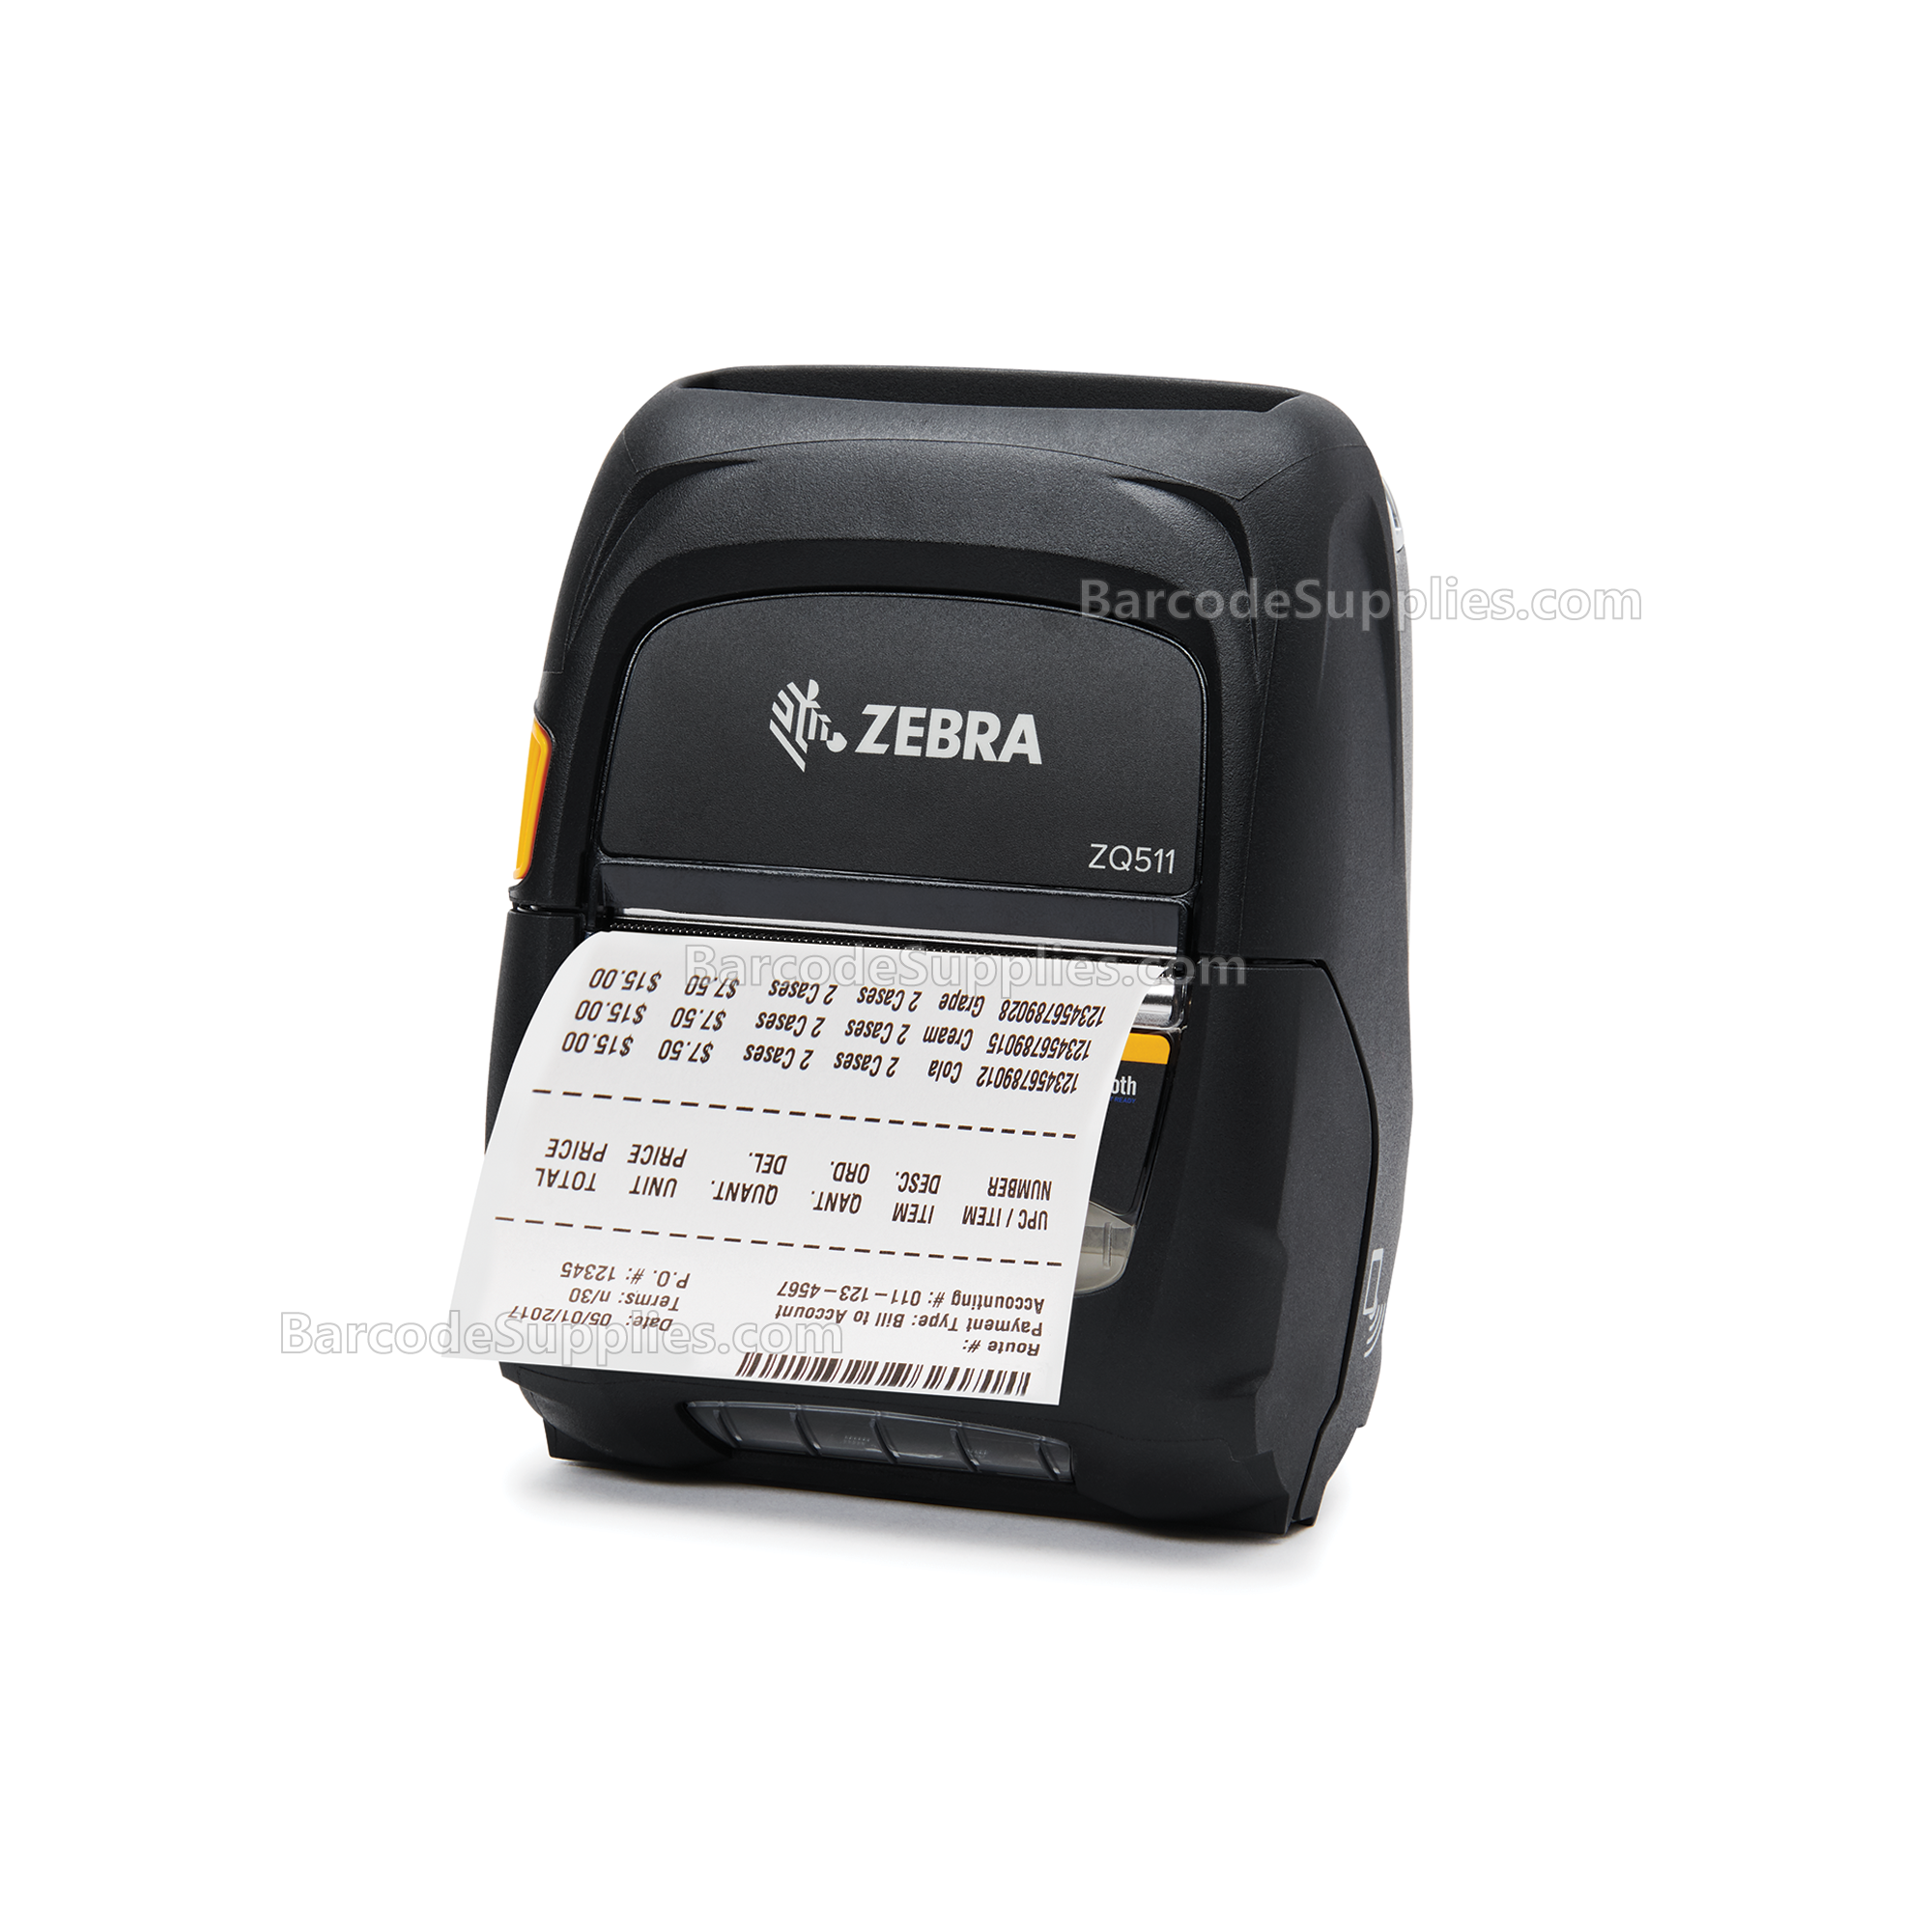 Zebra ZQ511 Mobile Printer - media width 3.15/80mm; English/Latin fonts, Bluetooth 4.1, no battery, US/Canada certs - MPN: ZQ51-BUE0010-00